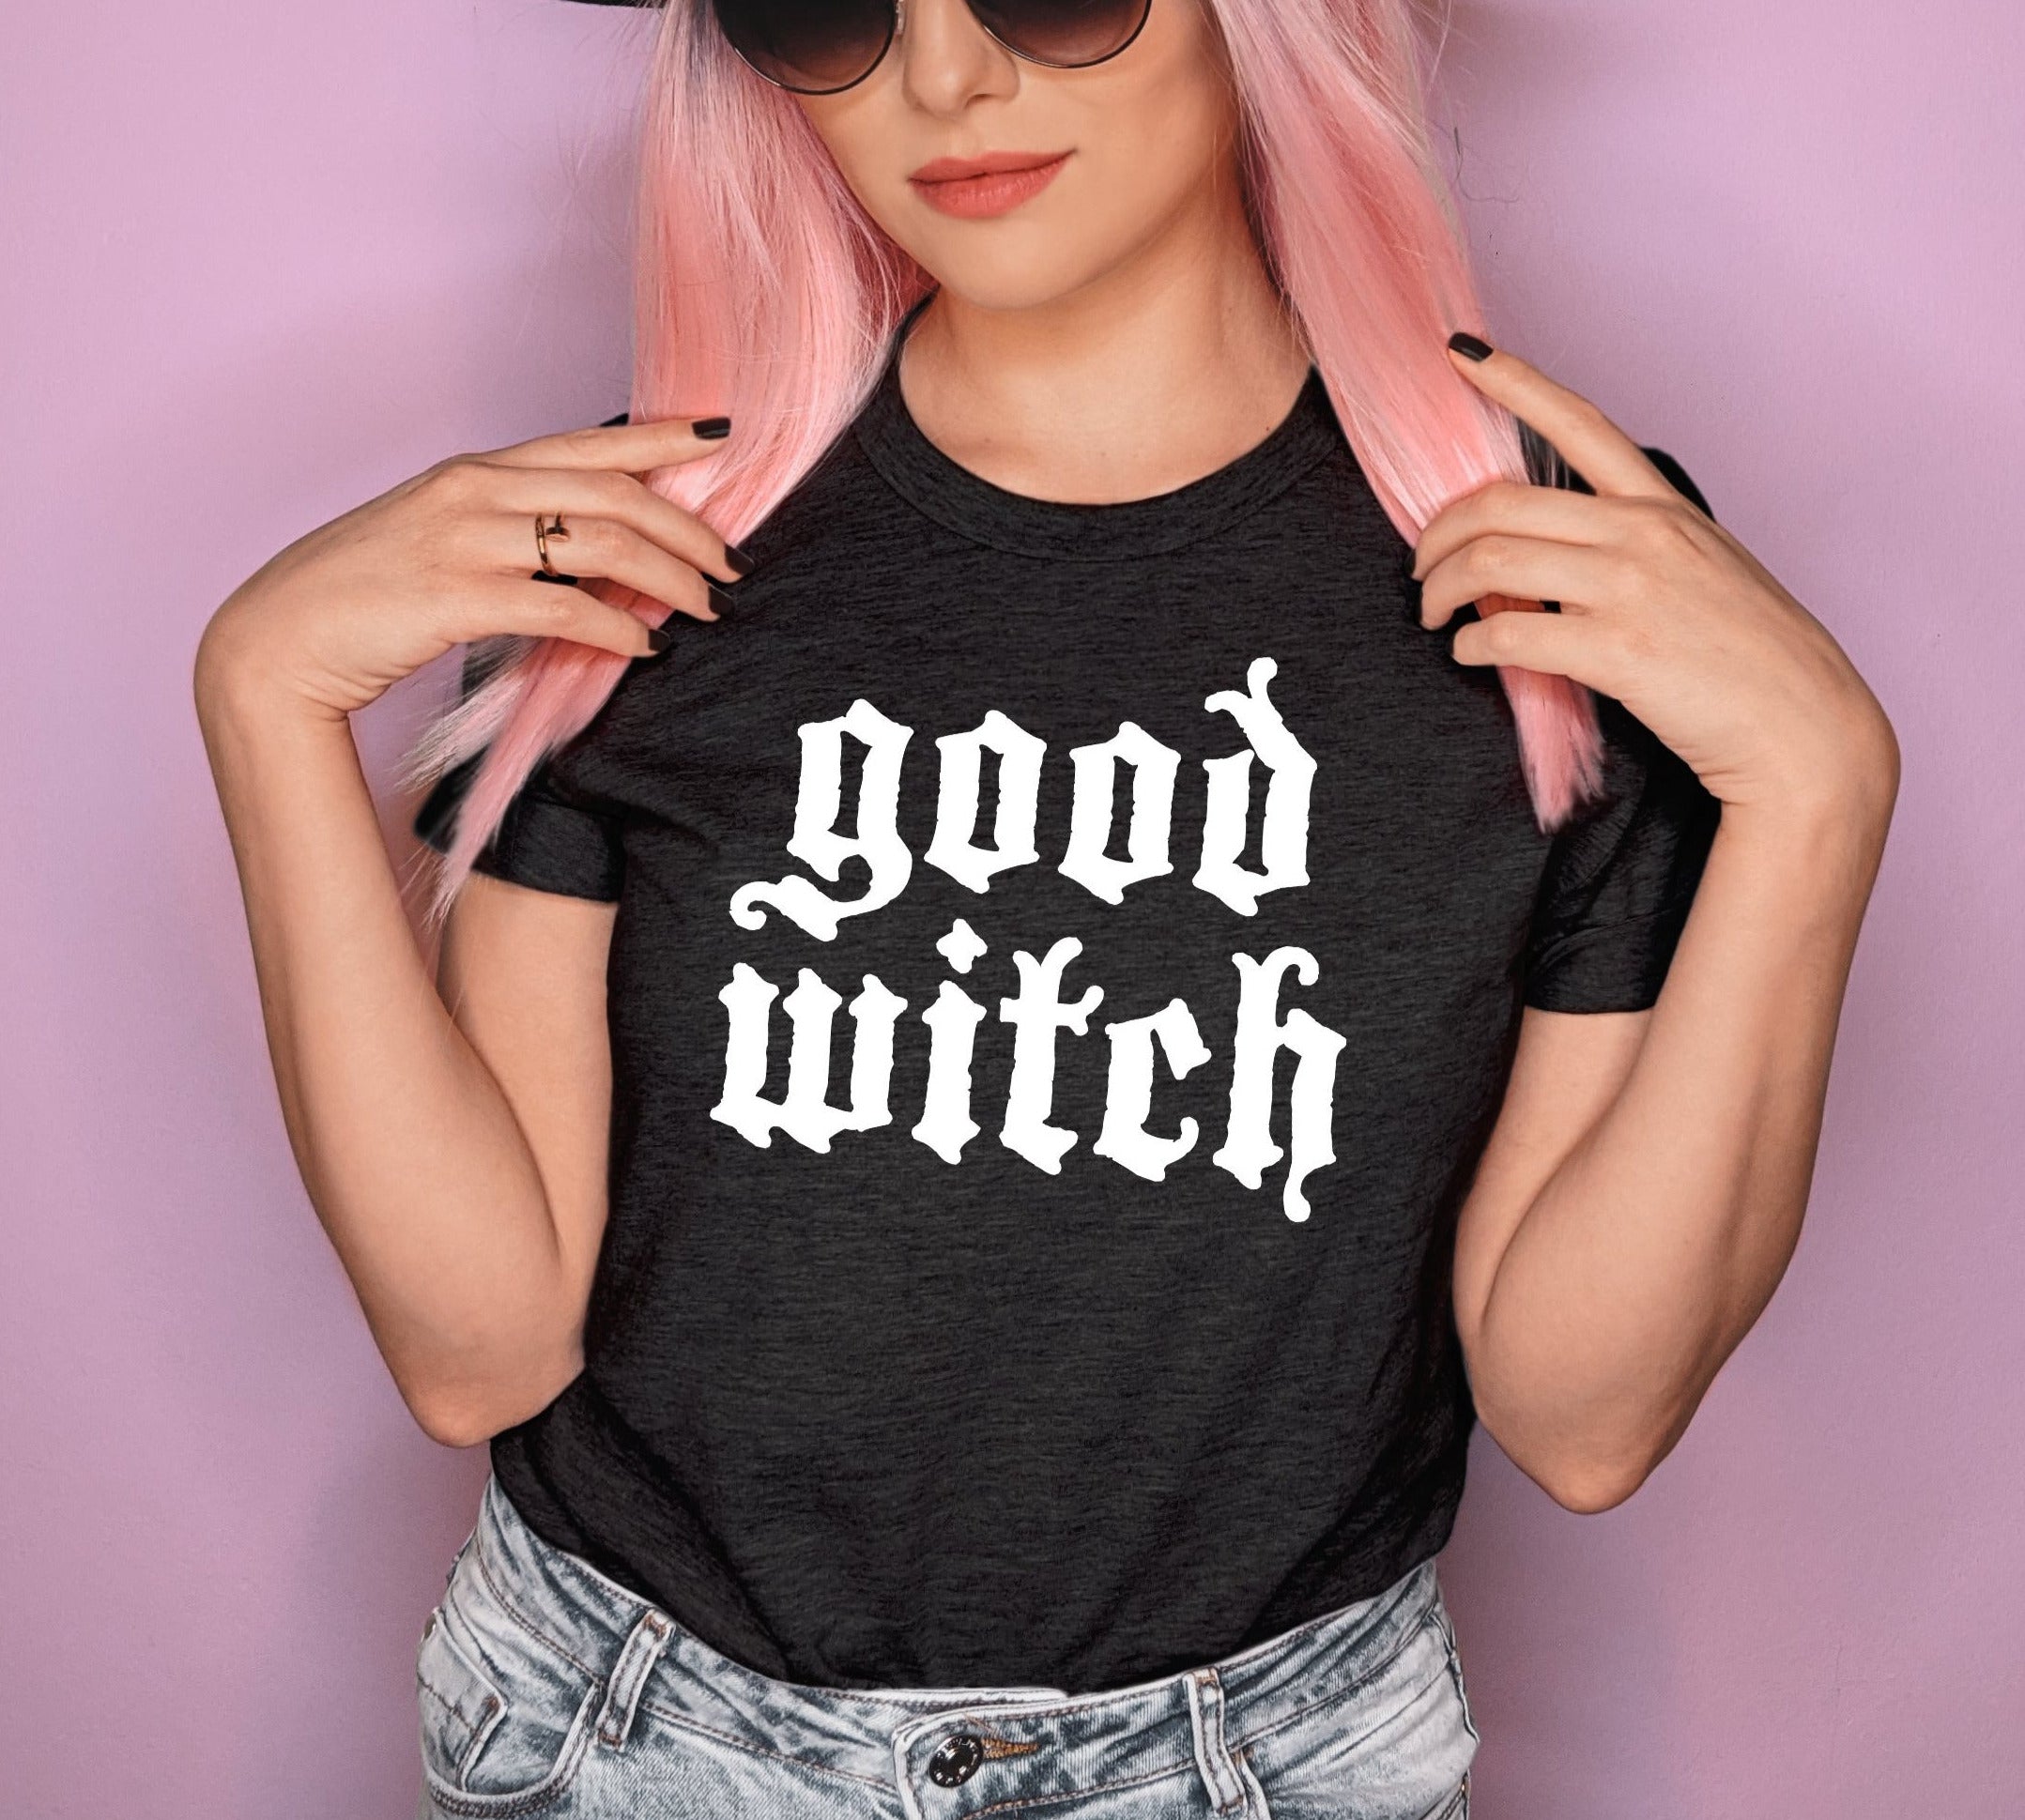 matching halloween shirt that says good witch - HighCiti